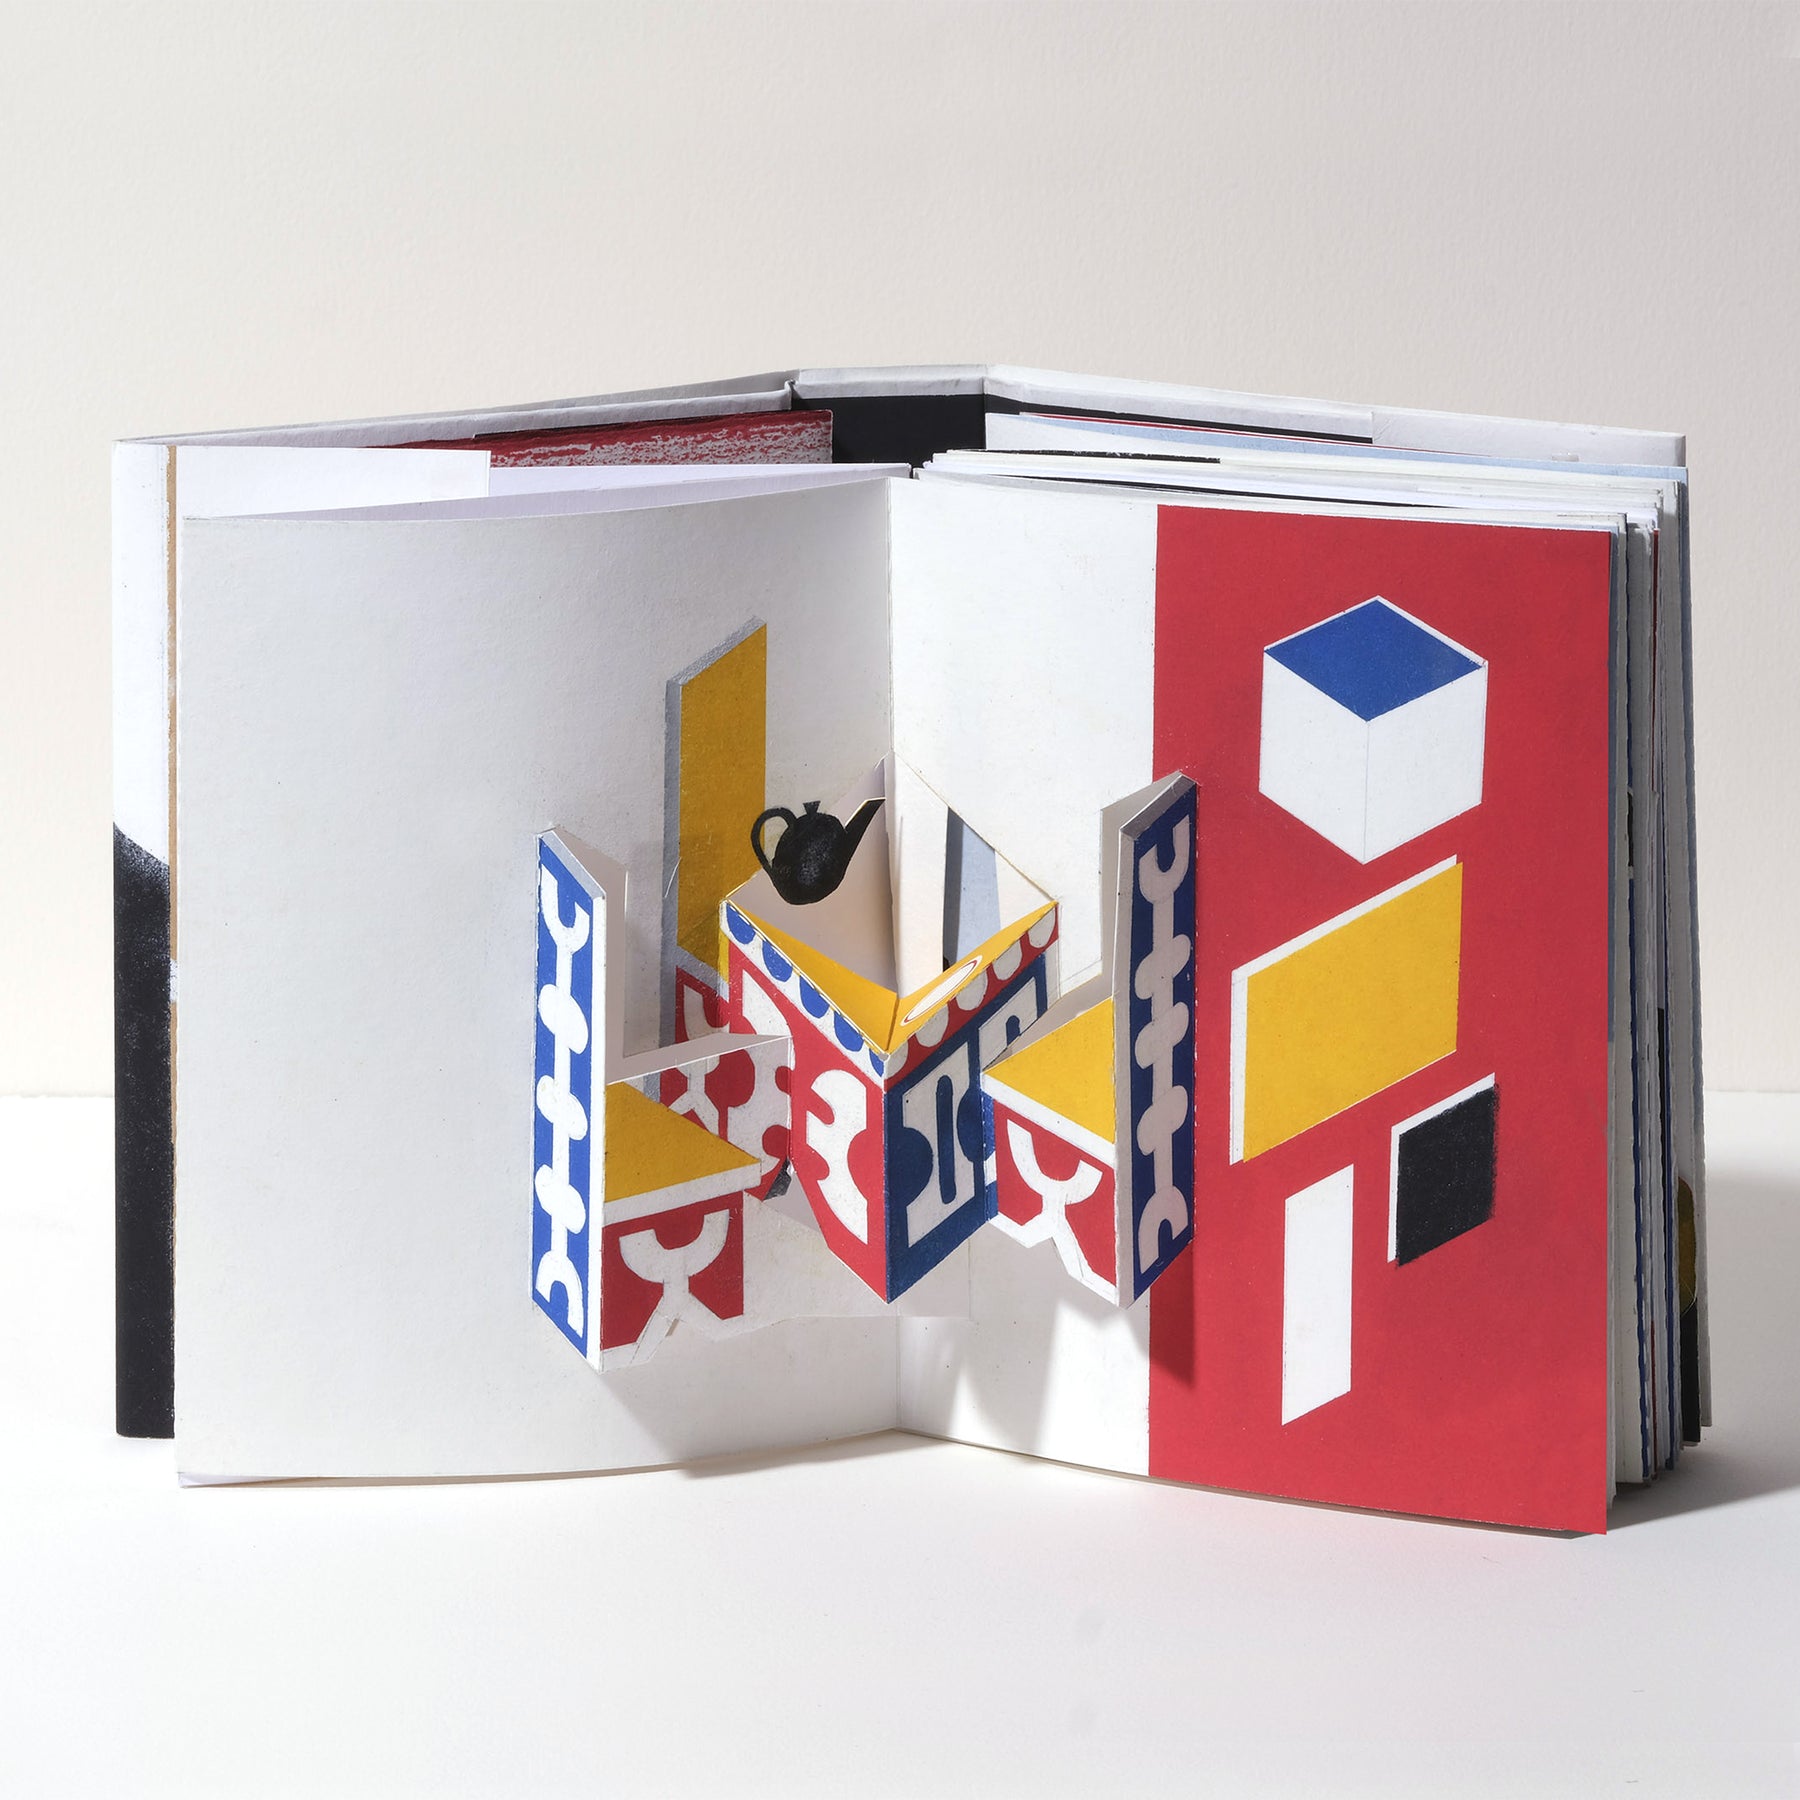 Yaka'Box Junior le coffret lecture pour enfants avec 16 livres jeunesse -  YakaBox - YAKABOOKS